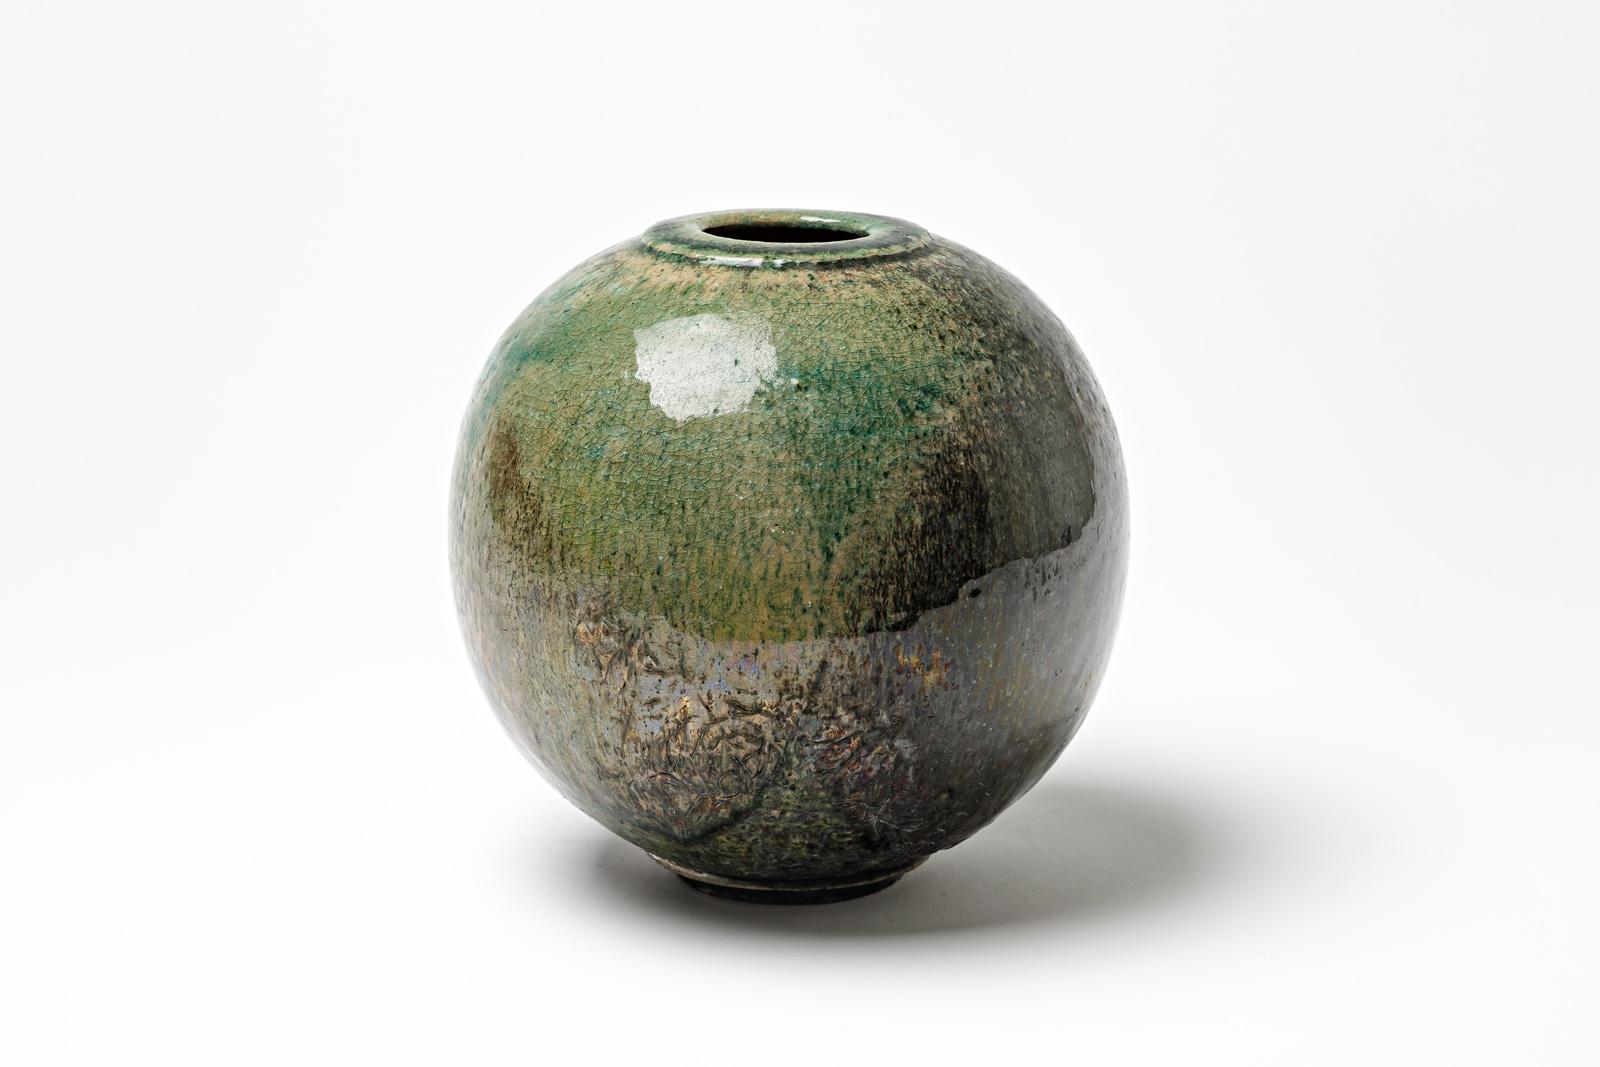 French Blue/green and black glazed ceramic vase by Gisèle Buthod Garçon, circa 1980-90 For Sale